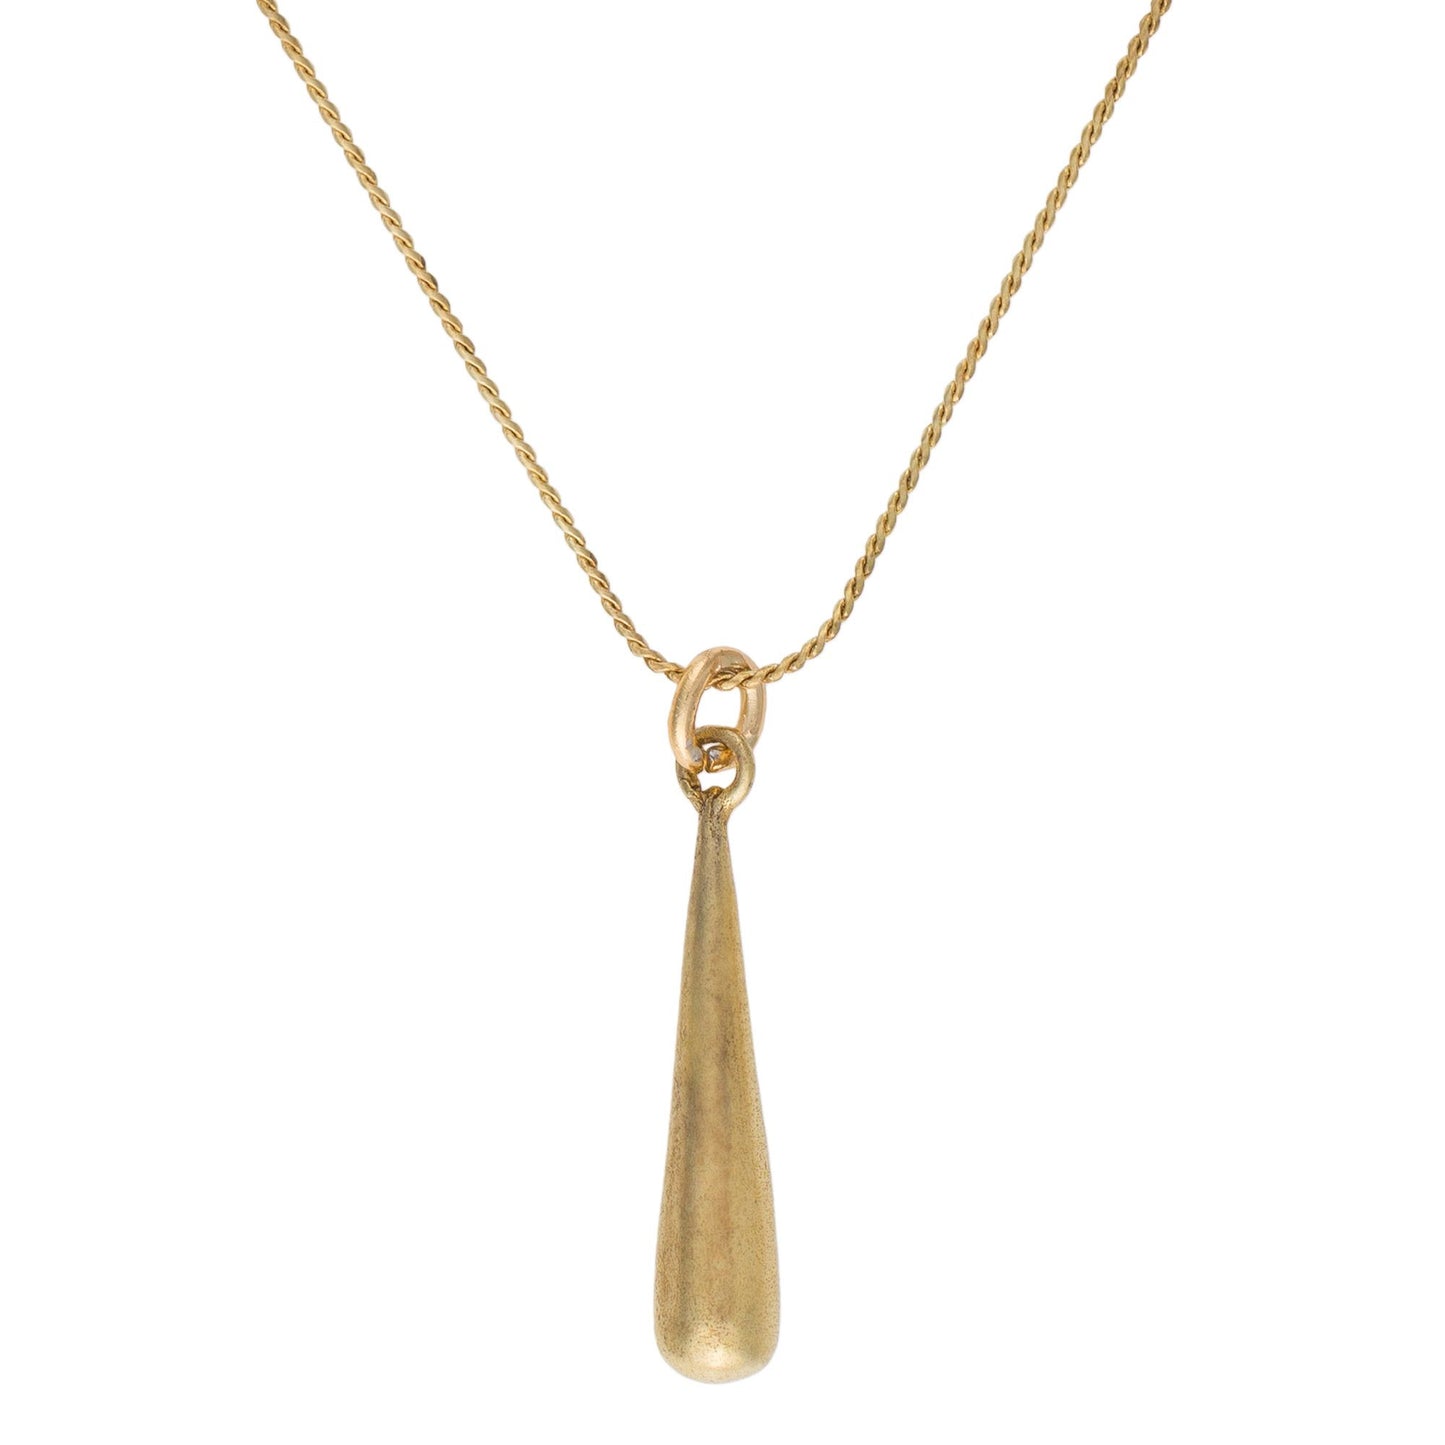 Gold plated "fine-drop" pendant choker